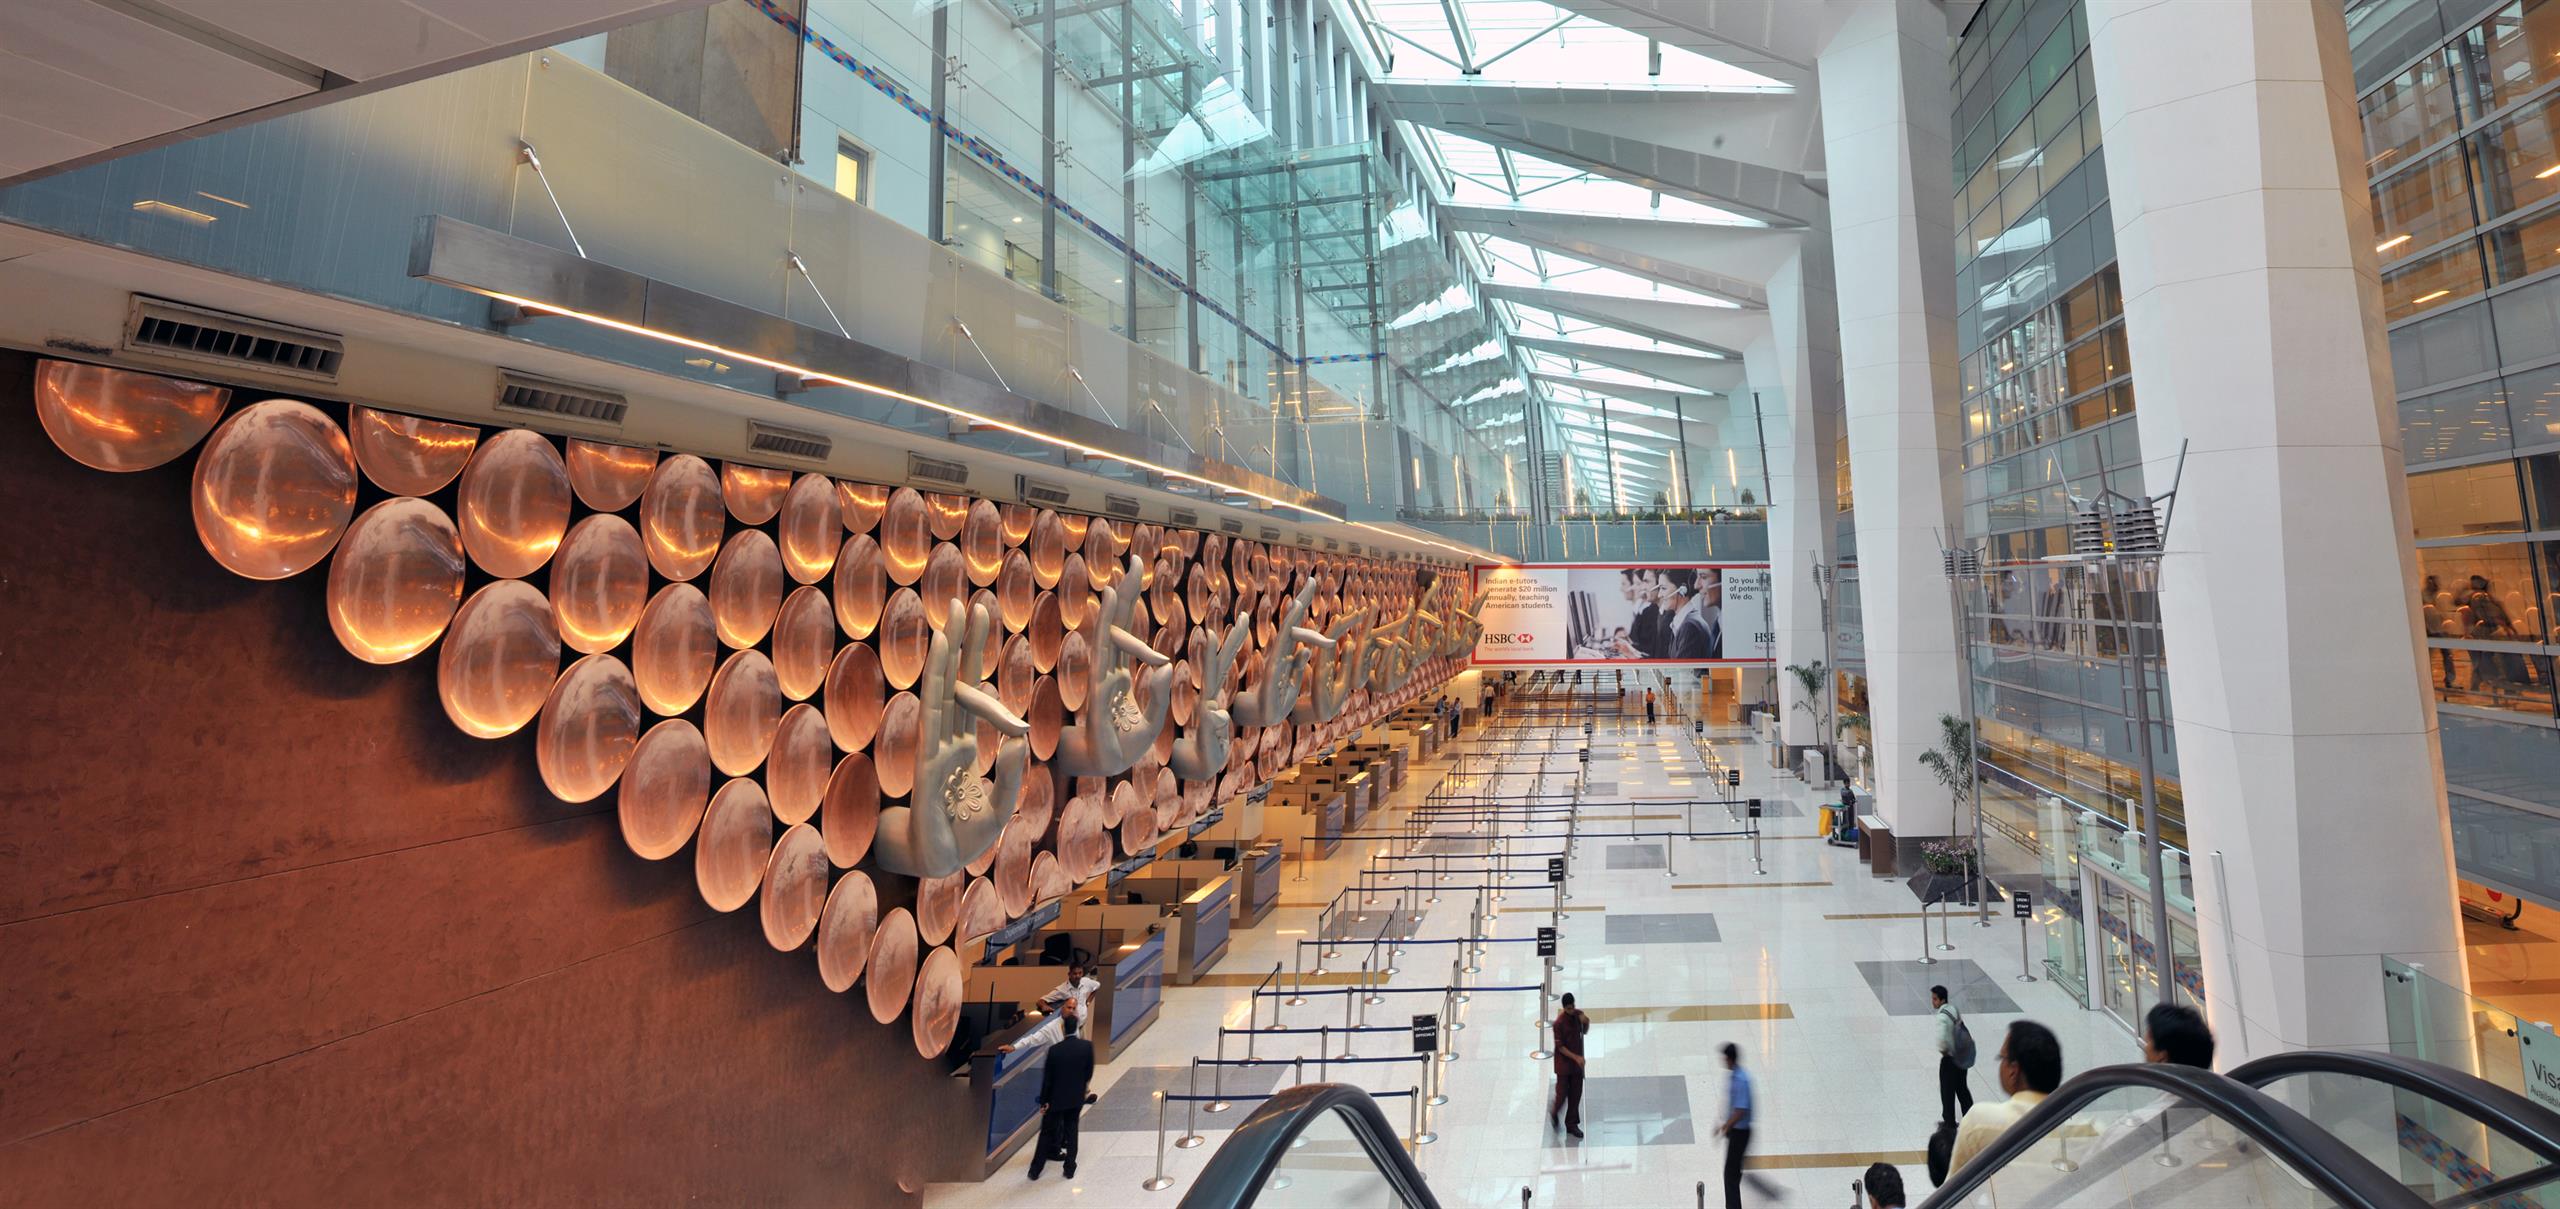 Inside the terminal at Delhi International